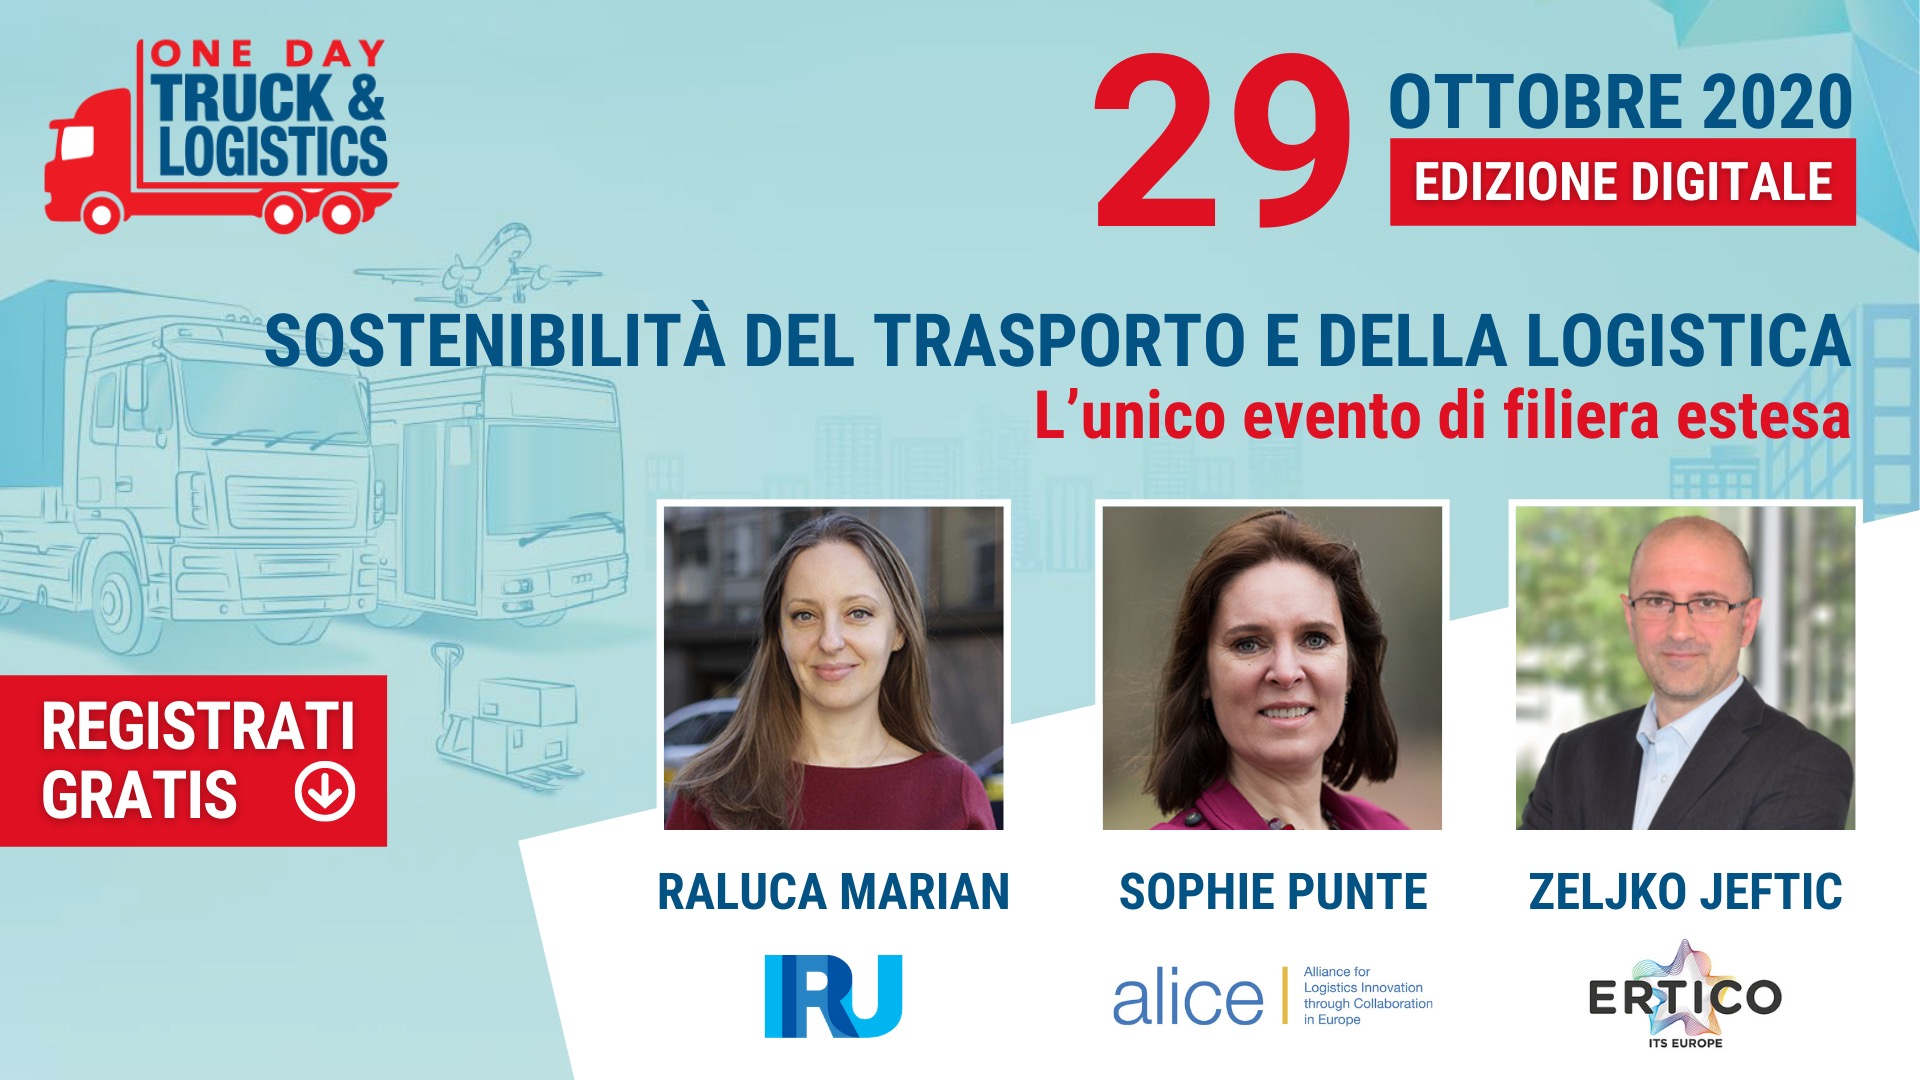 one day truck and logistics IRU Alice Ertico 29 ottobre2020 digital edition fiap autotrasporti v2